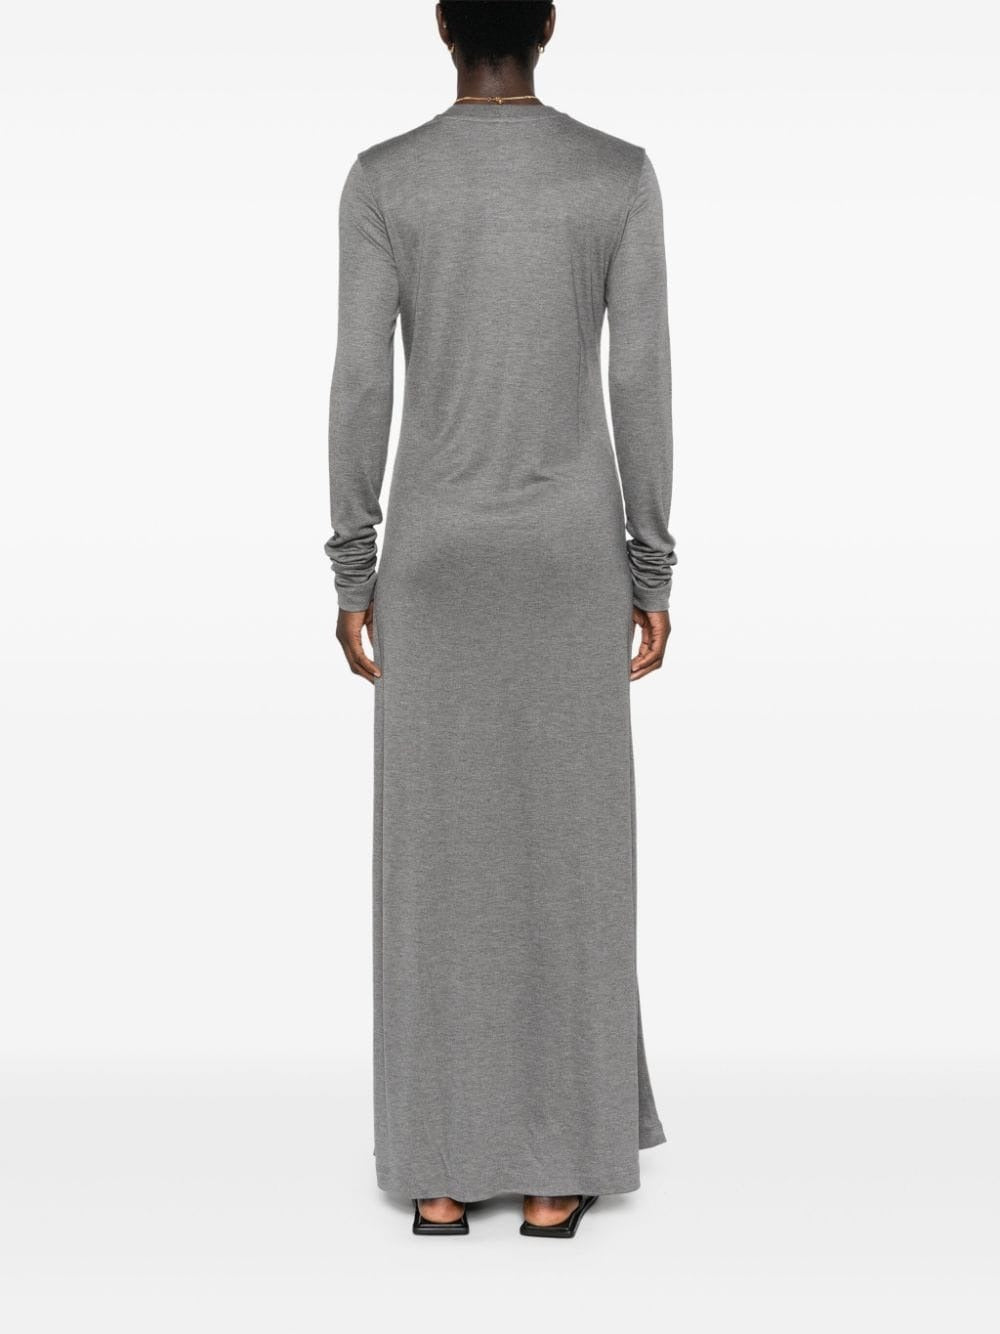 TOTEME-Long-Sleeve Jersey Dress-